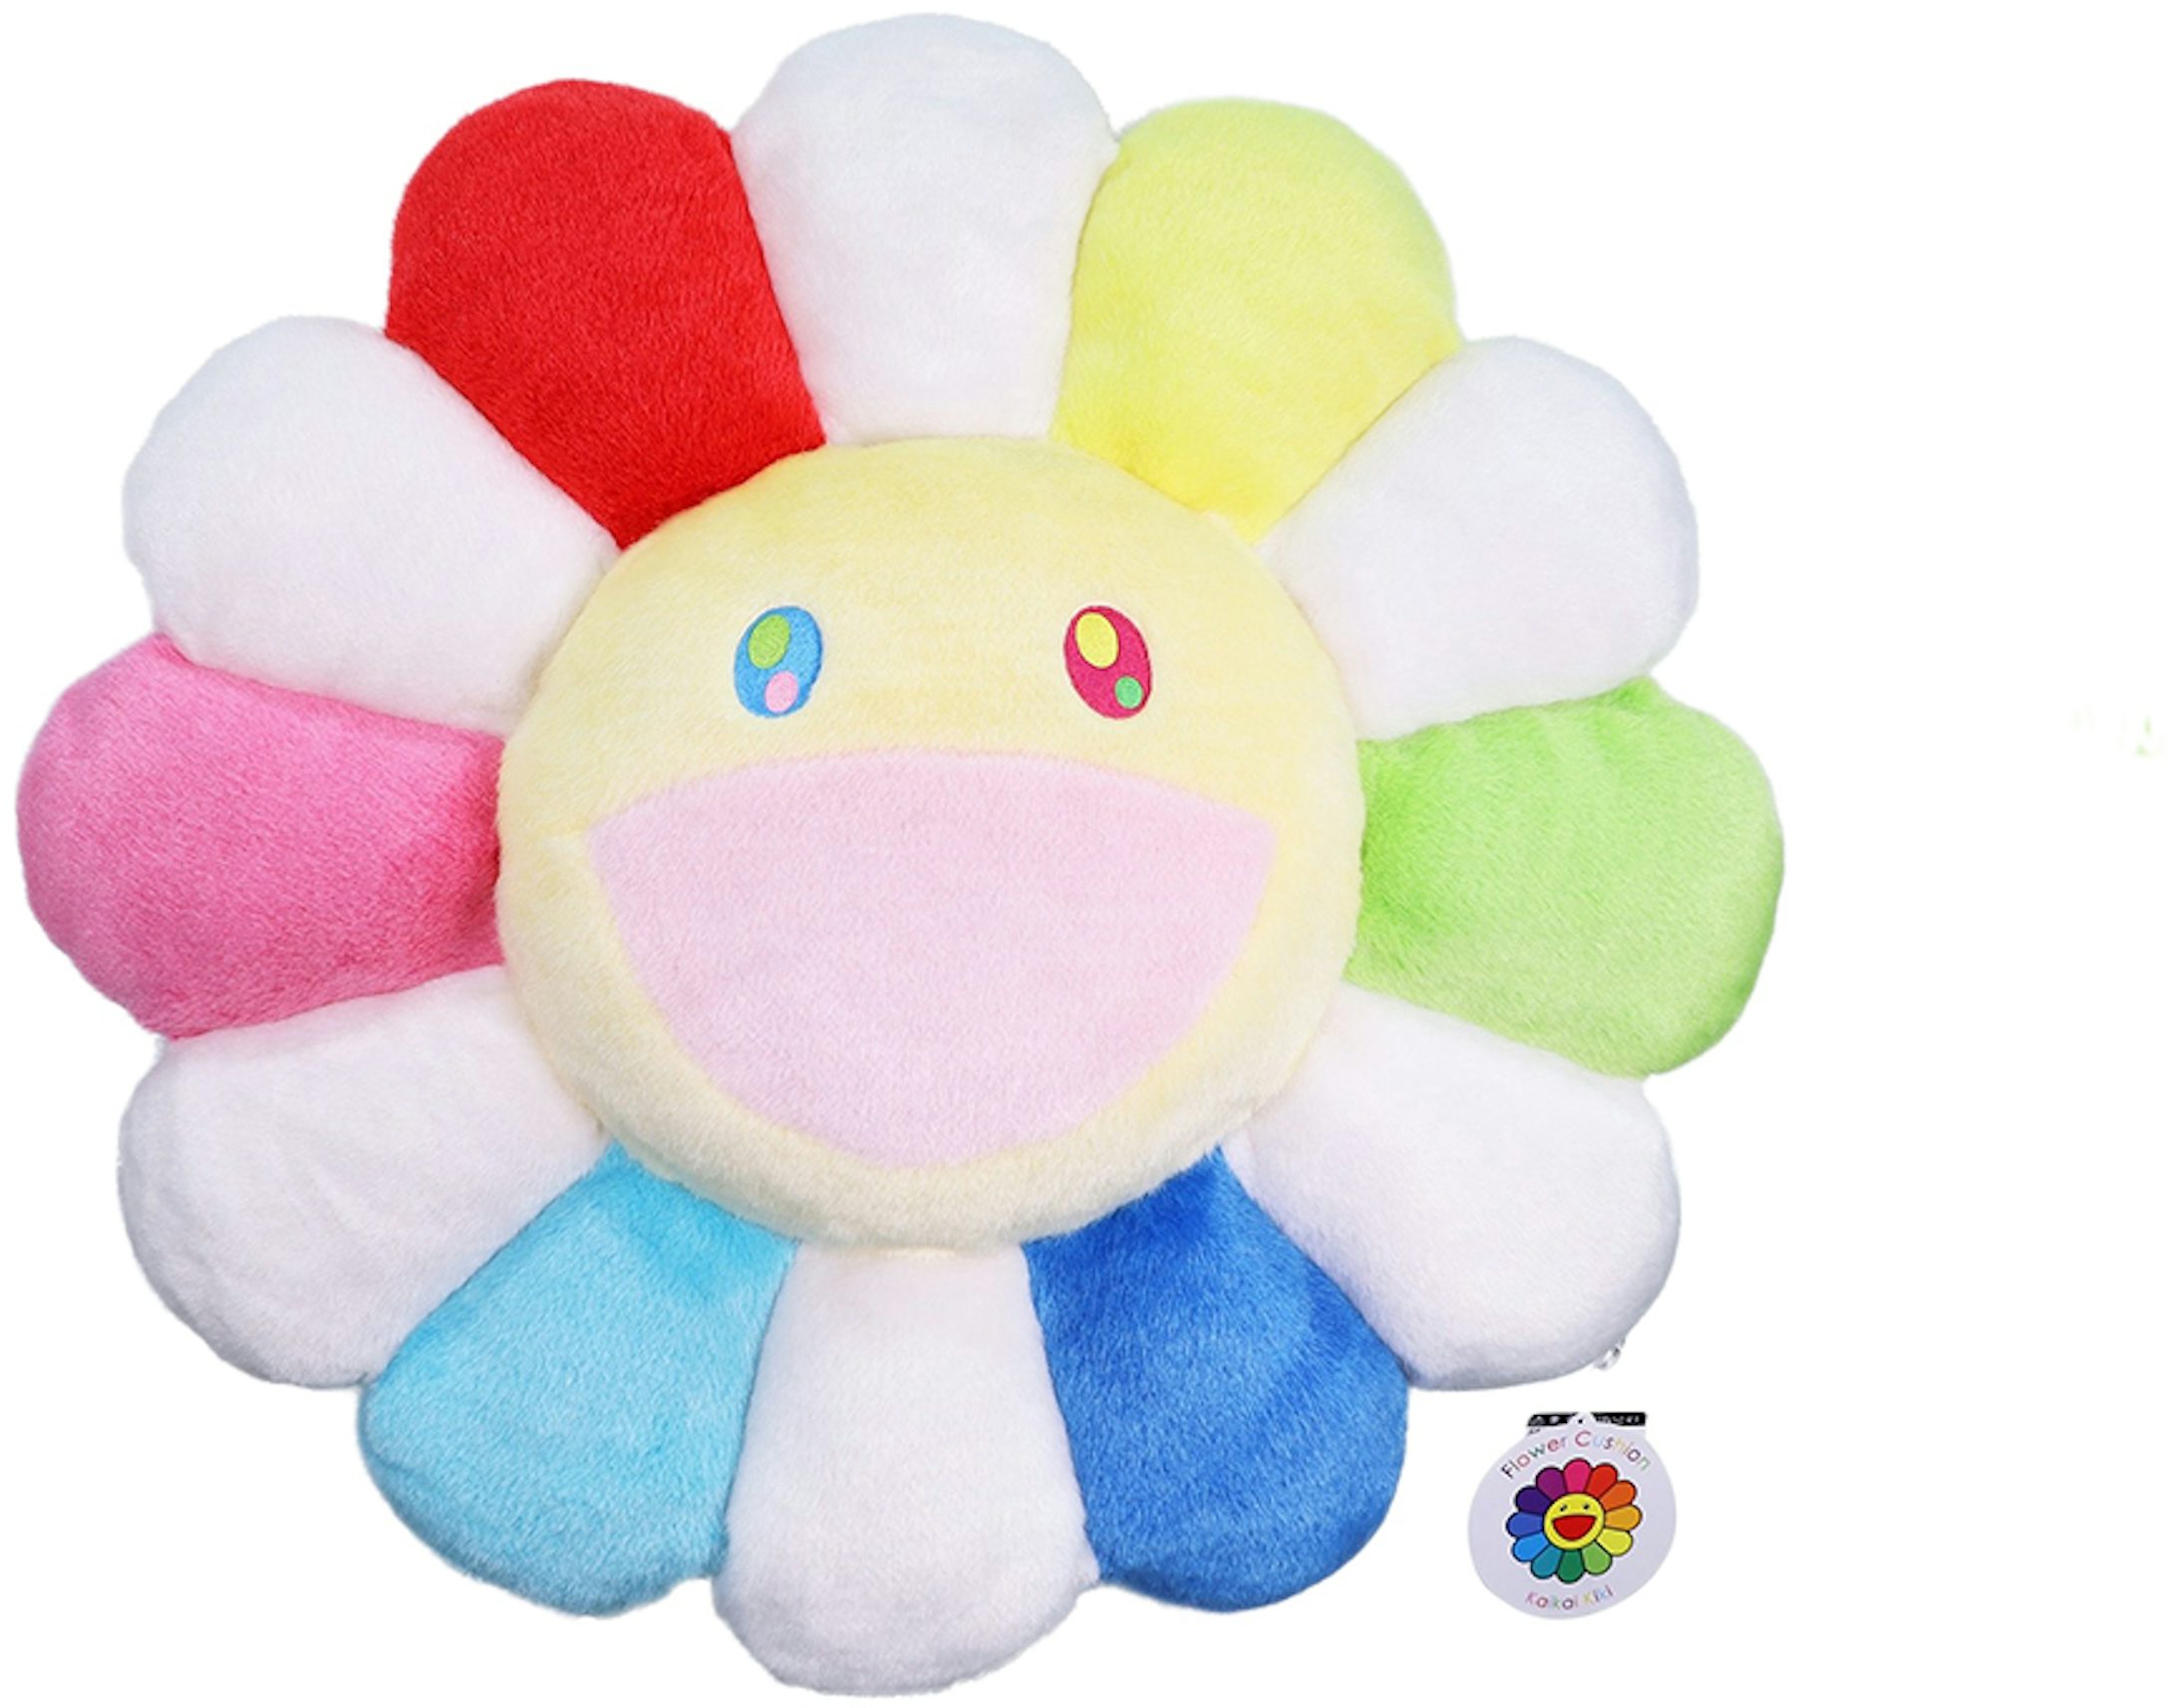 takashi murakami flower keychain or plush pillow / stuffed animal